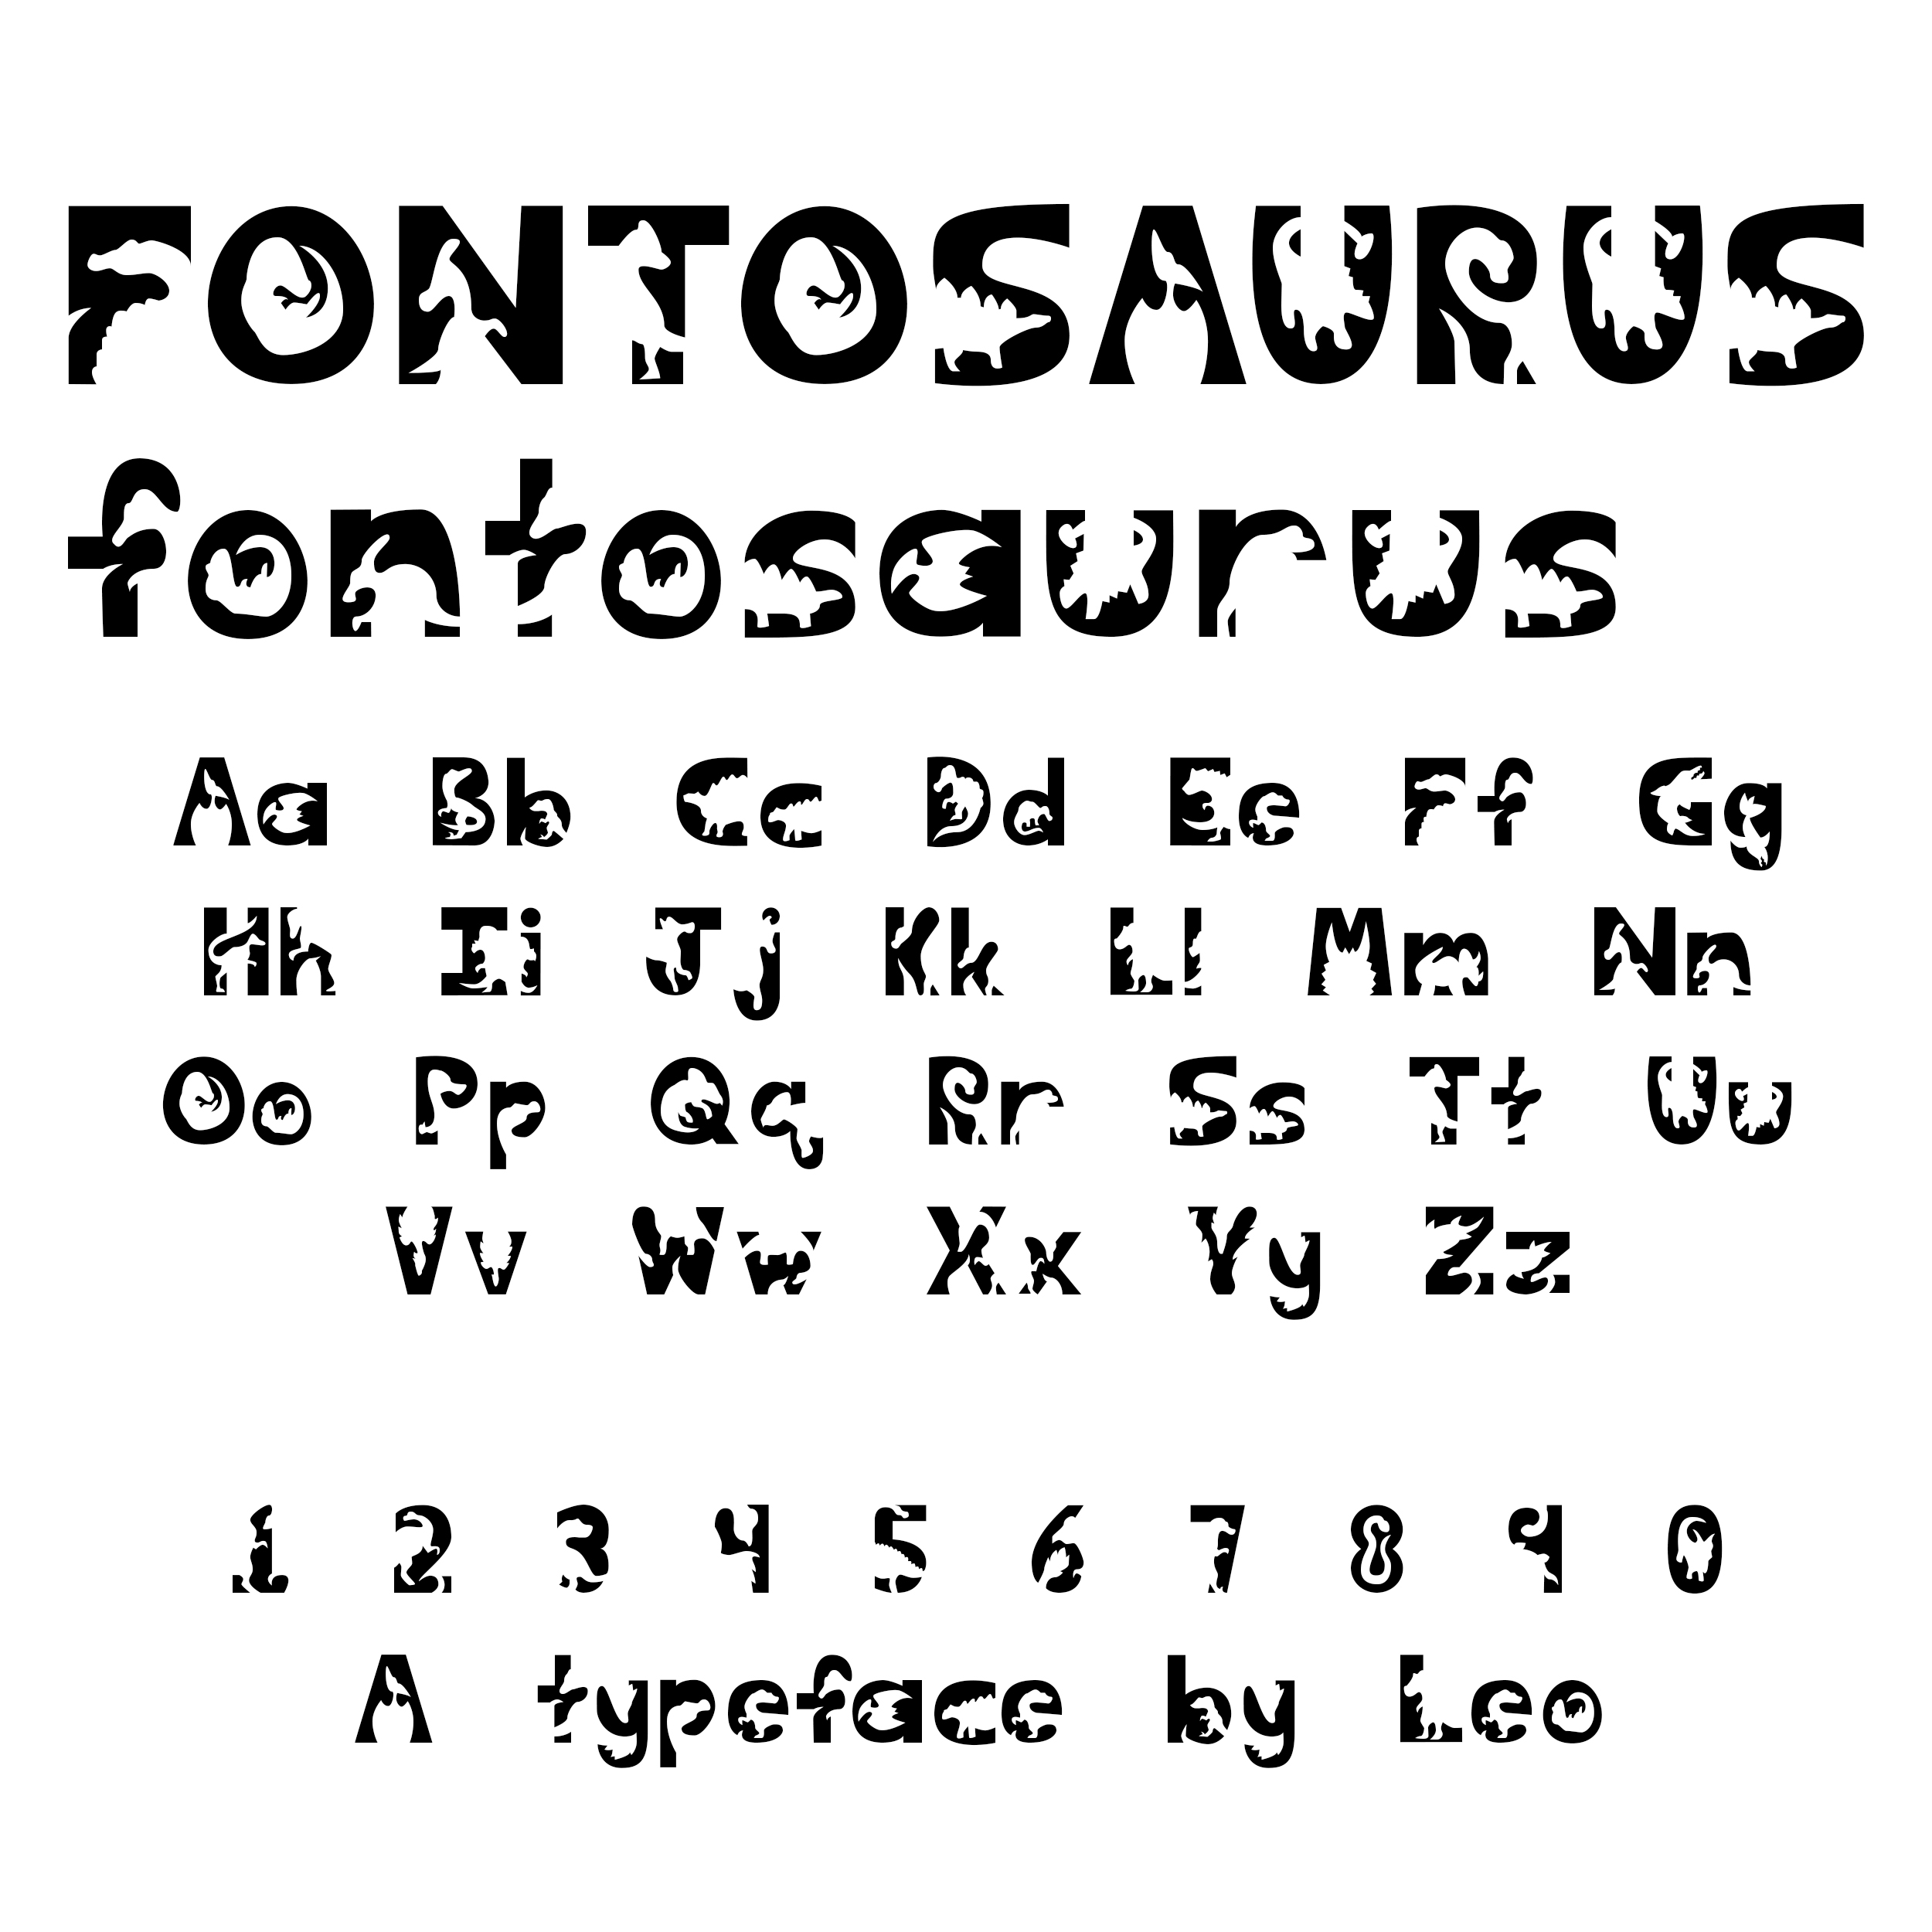 Fontosaurus_type